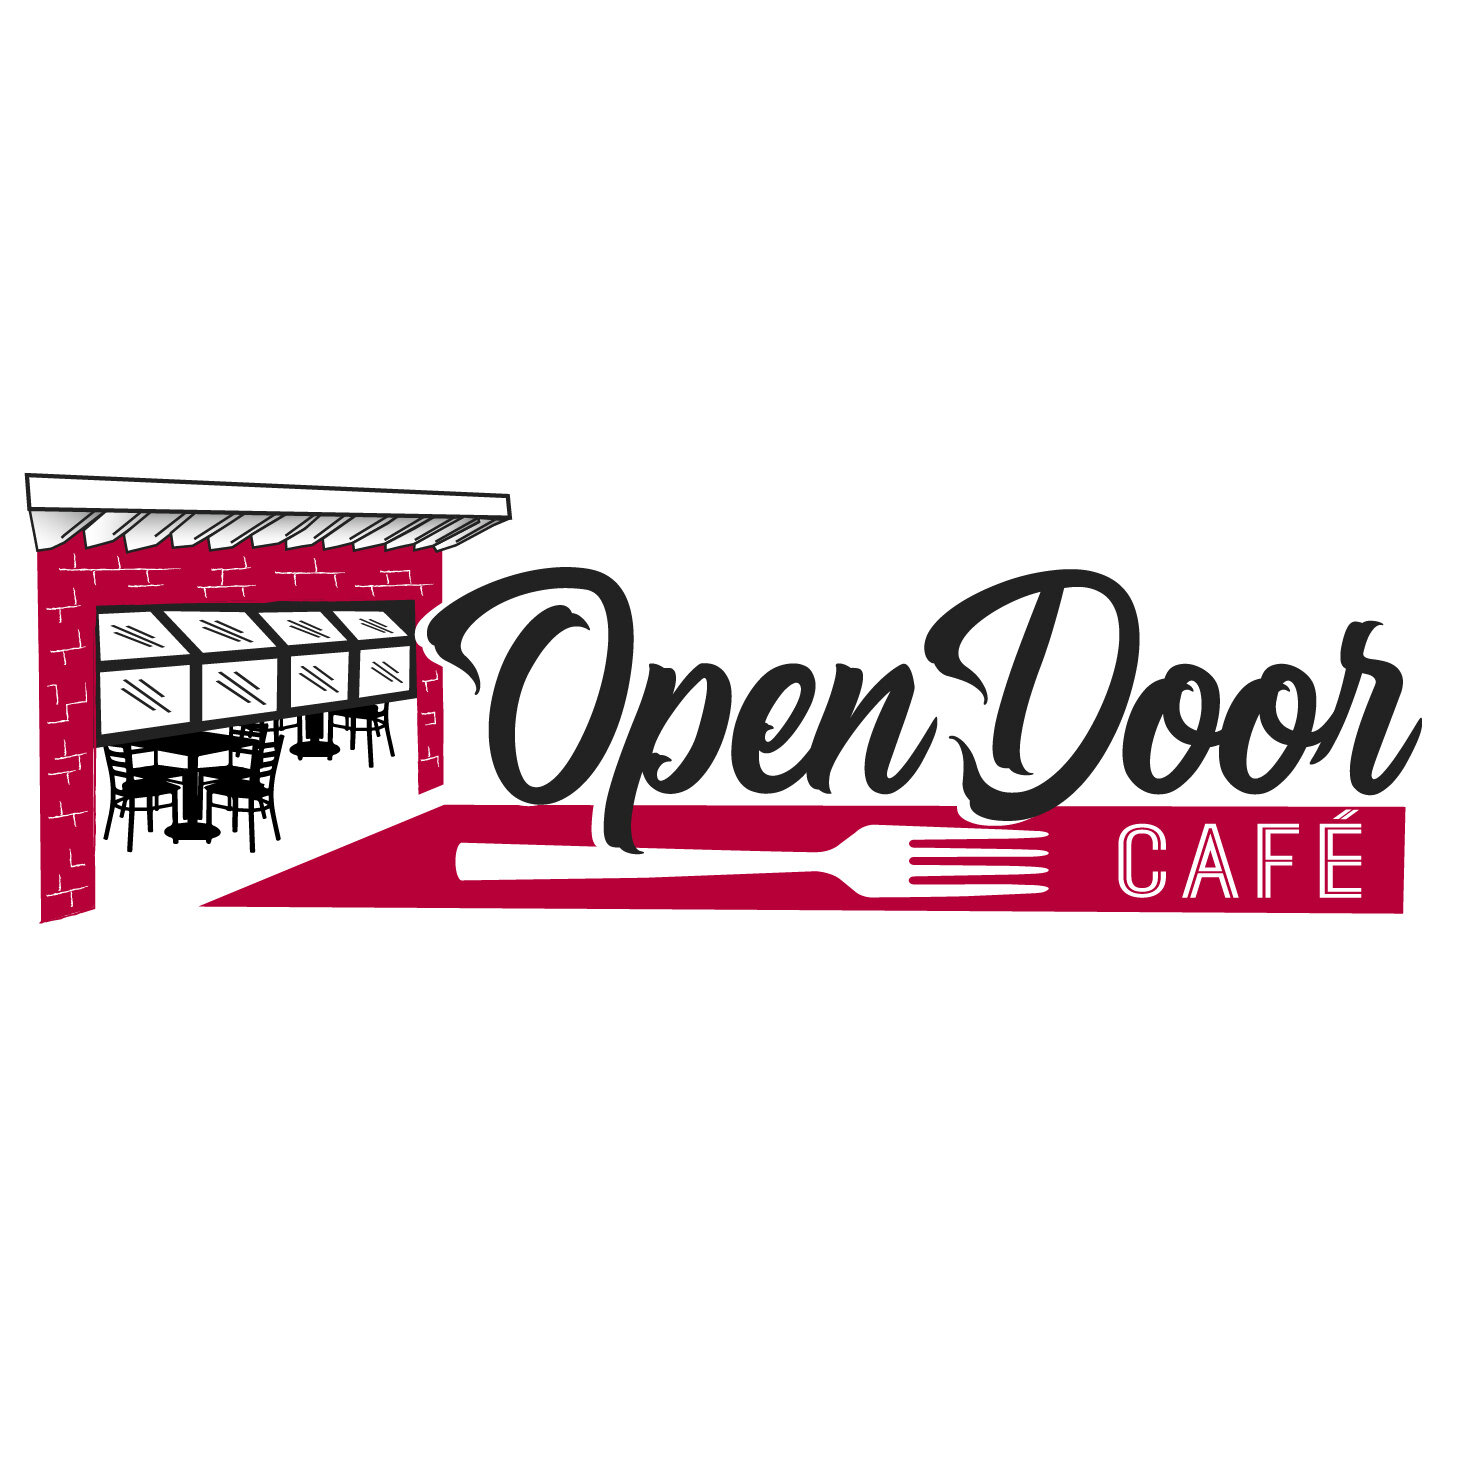 OpendoorCafe_Square.jpg